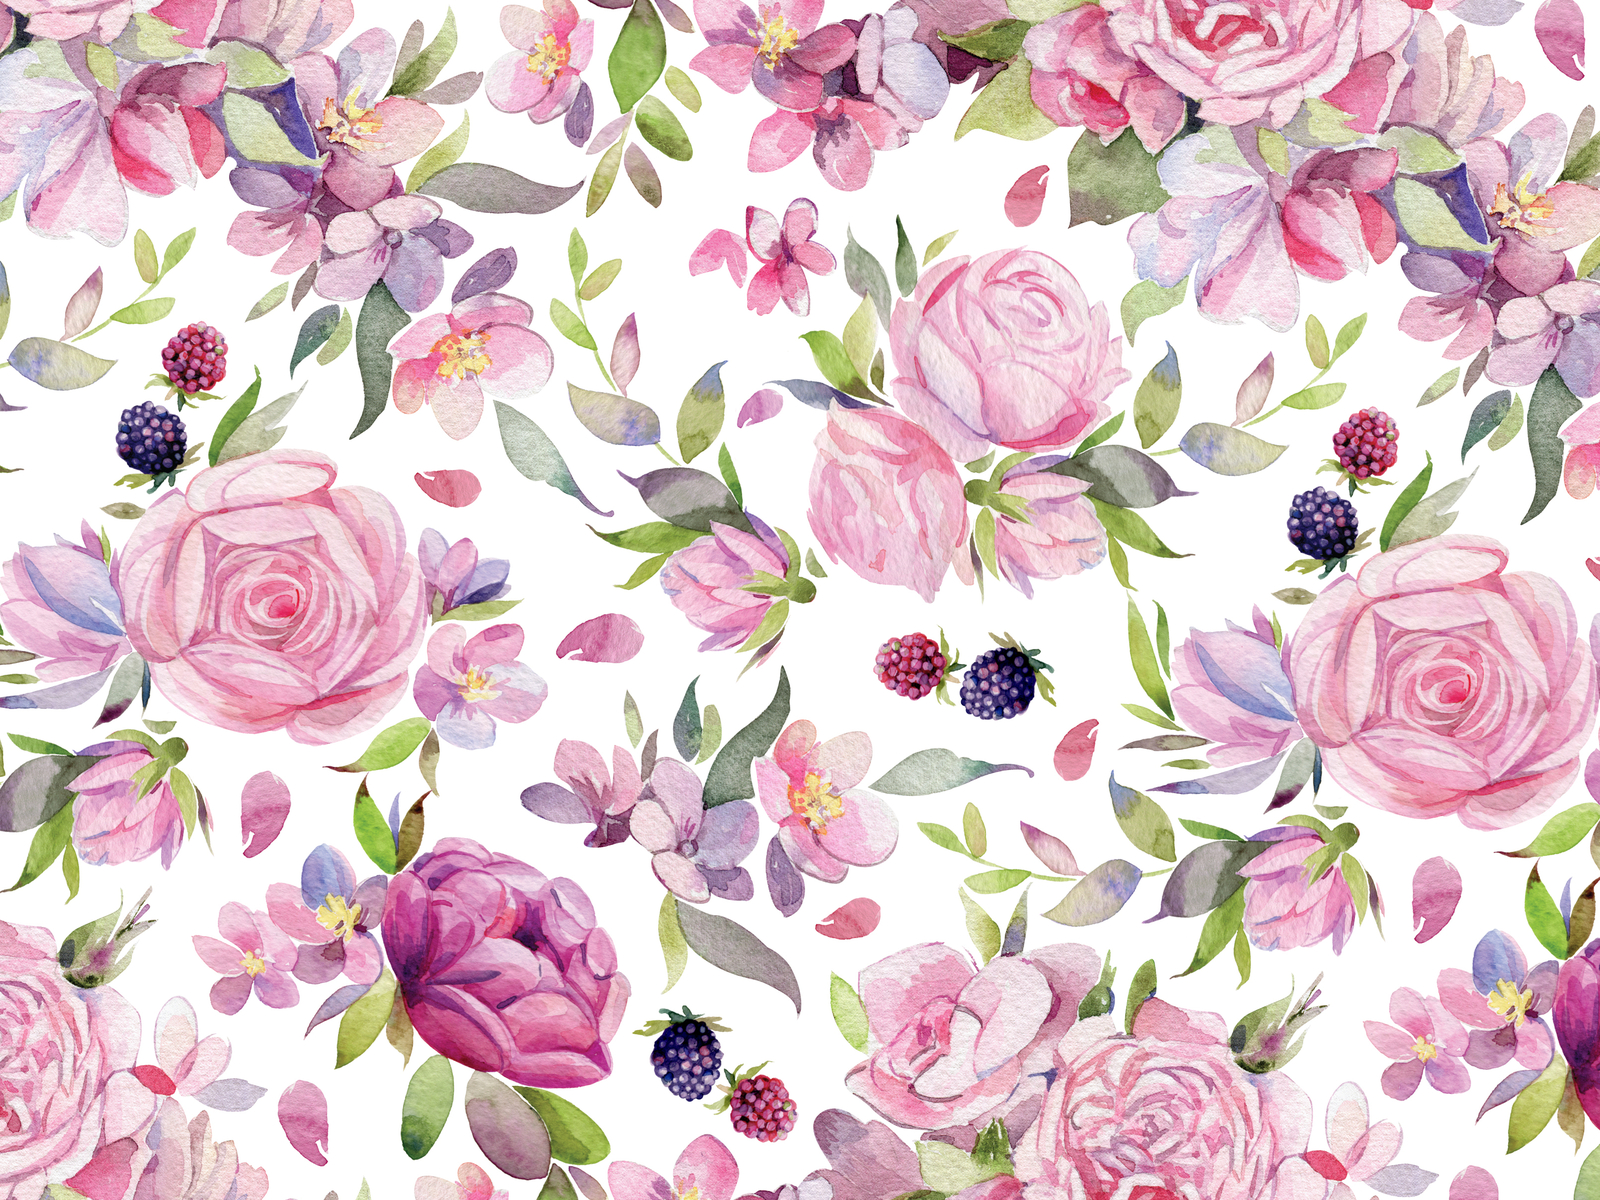 Watercolor floral pattern. by Karinka BU on Dribbble